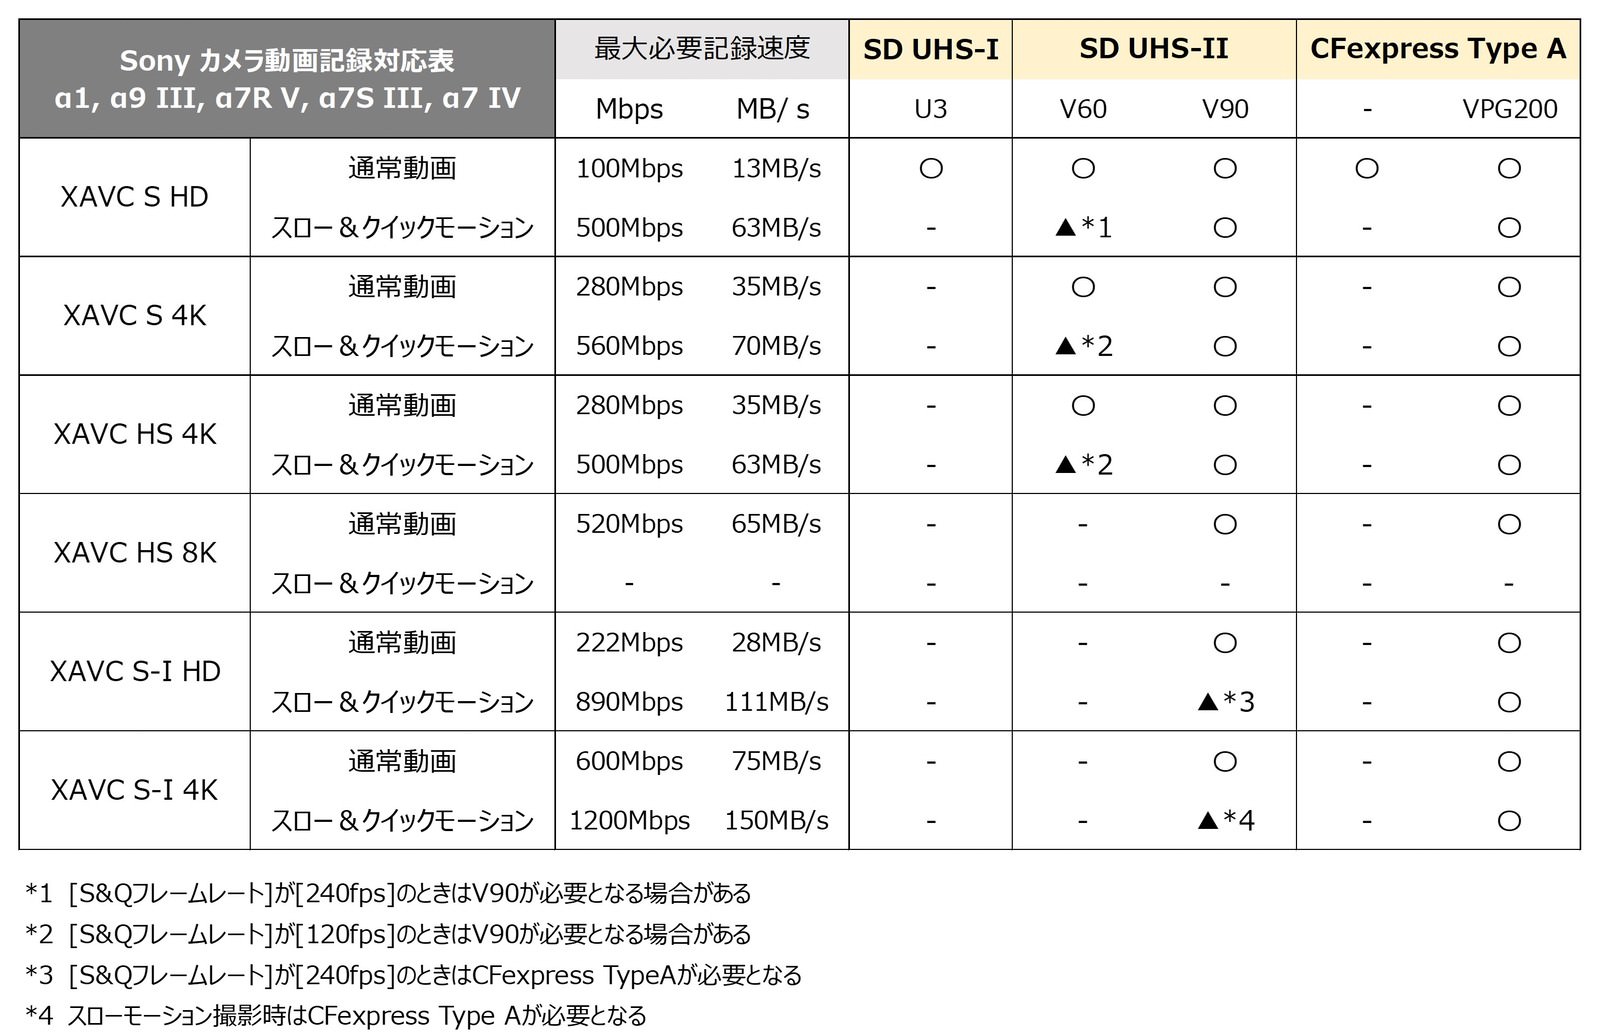 Sony-CFexpress-card-new-gold-model-03.jpg